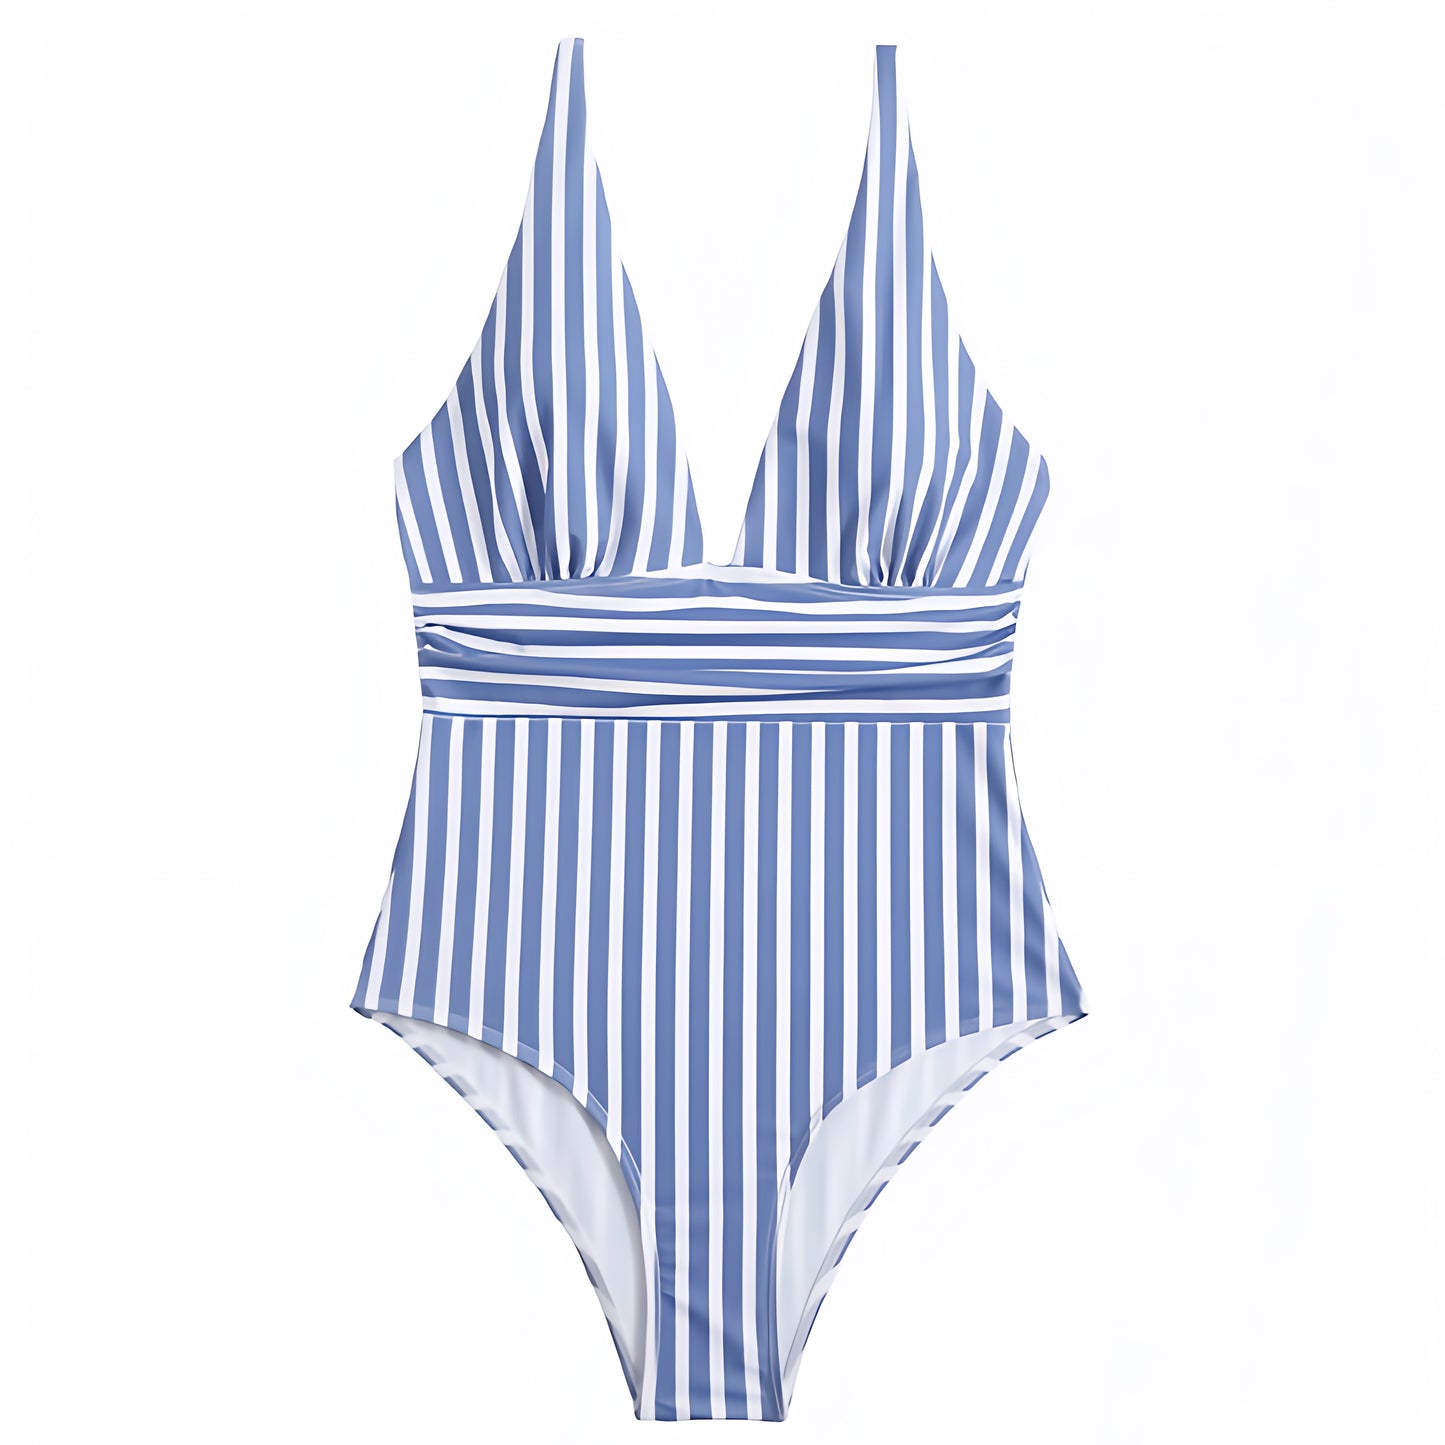 light-blue-and-white-striped-seersucker-v-neck-spaghetti-strap-push-up-wireless-thong-cheeky-bodycon-one-piece-swimsuit-bikini-swimwear-bathing-suit-spring-2024-summer-chic-trendy-women-ladies-elegant-classy-modest-preppy-style-coastal-granddaughter-beach-wear-hill-house-minow-frankies-dupe